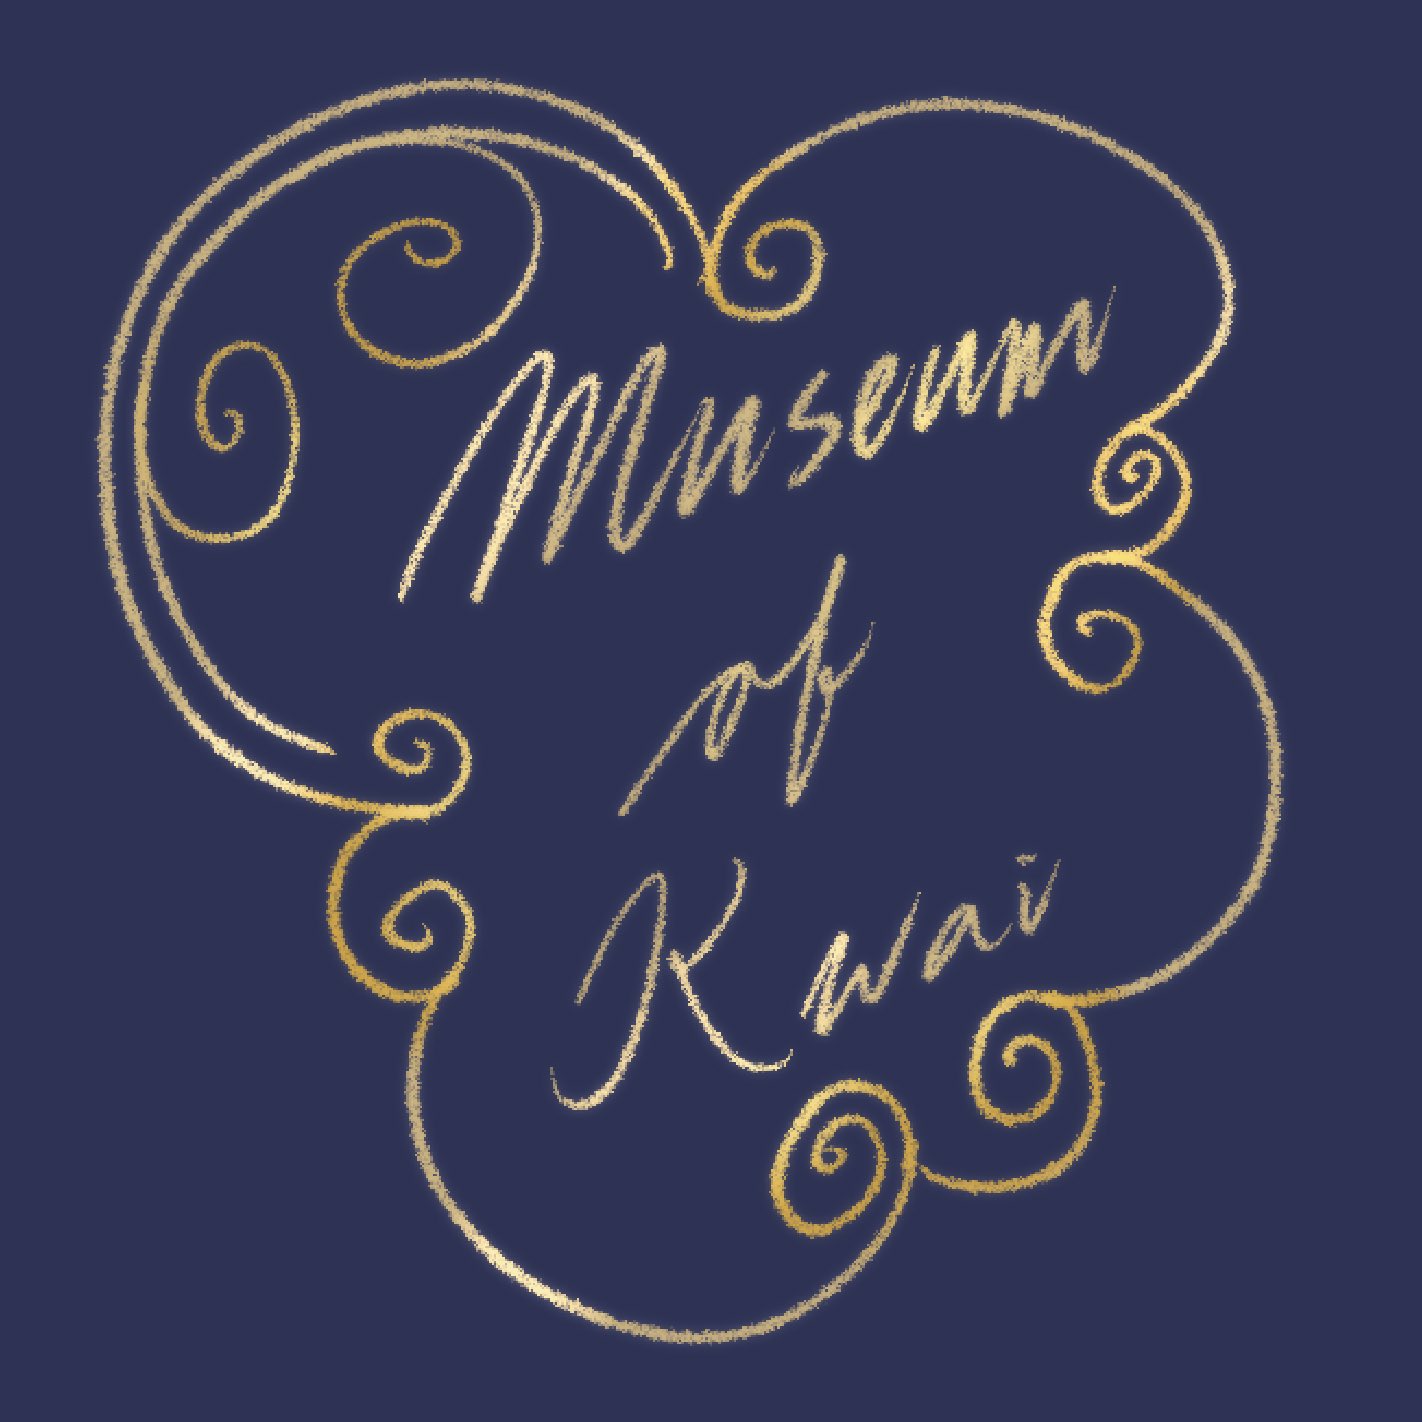 Museum Committee